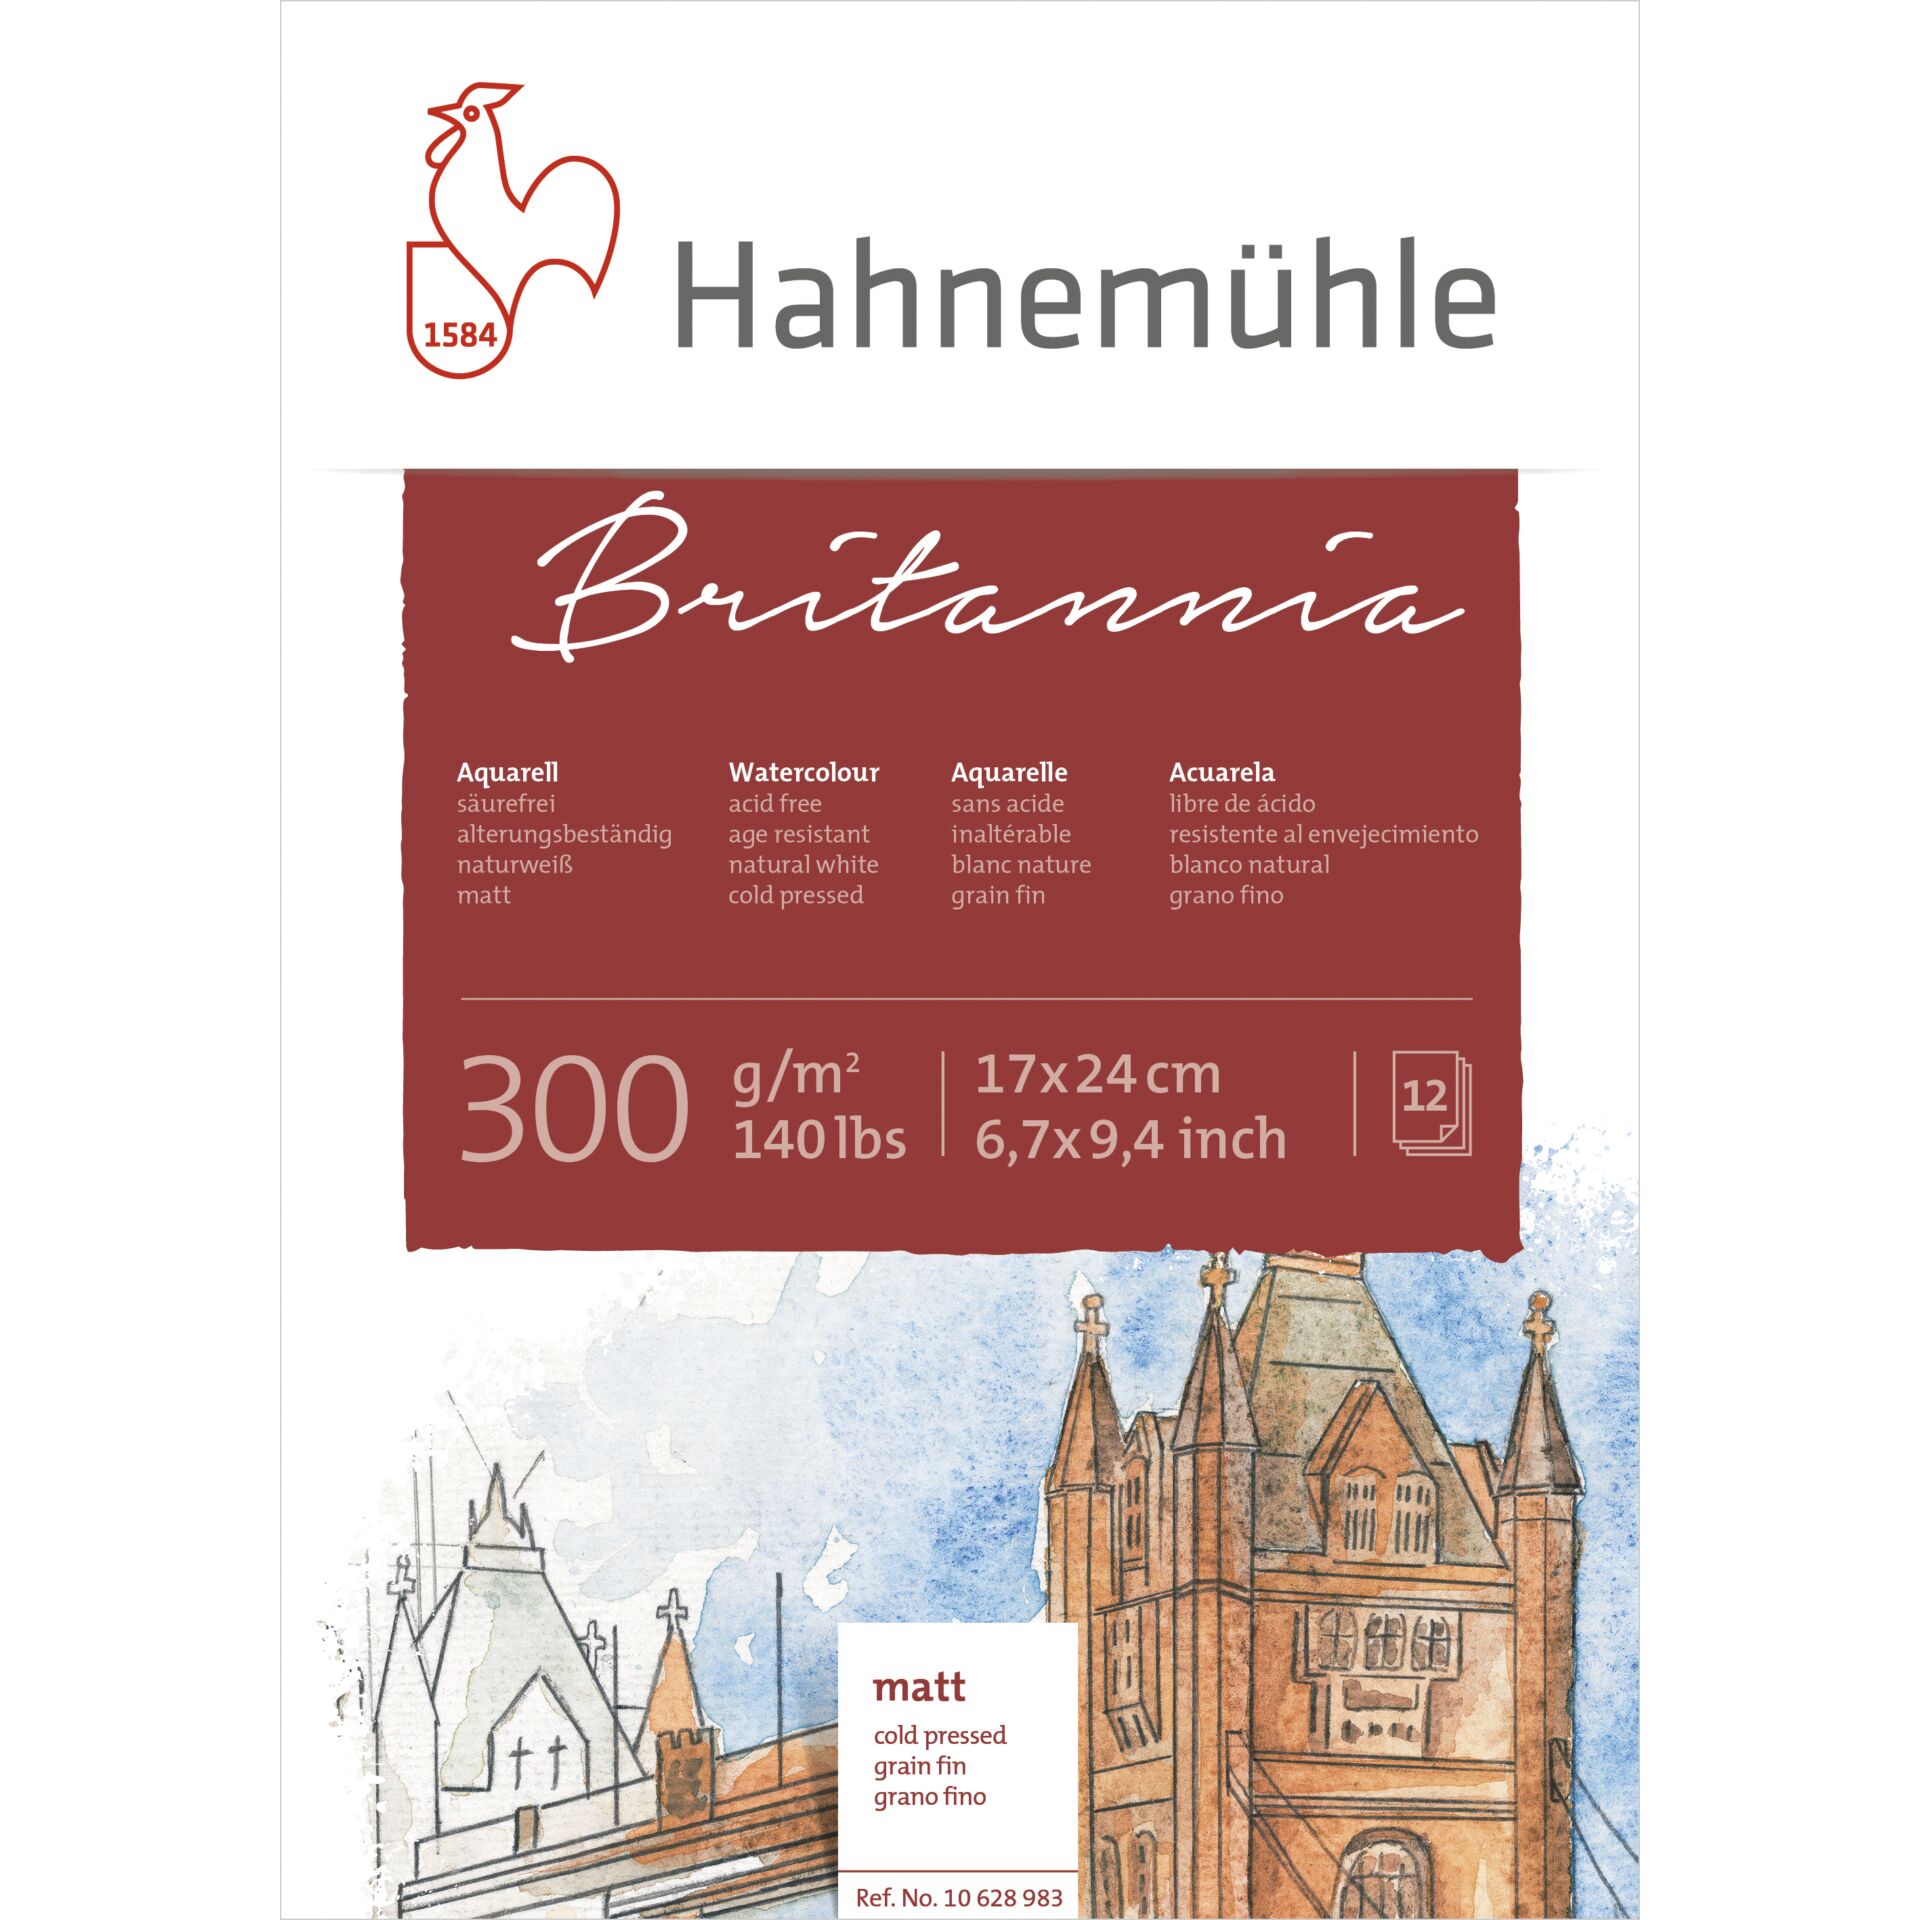 Hahnemühle Britannia Watercolour cold pressed 17x24cm 300g 1